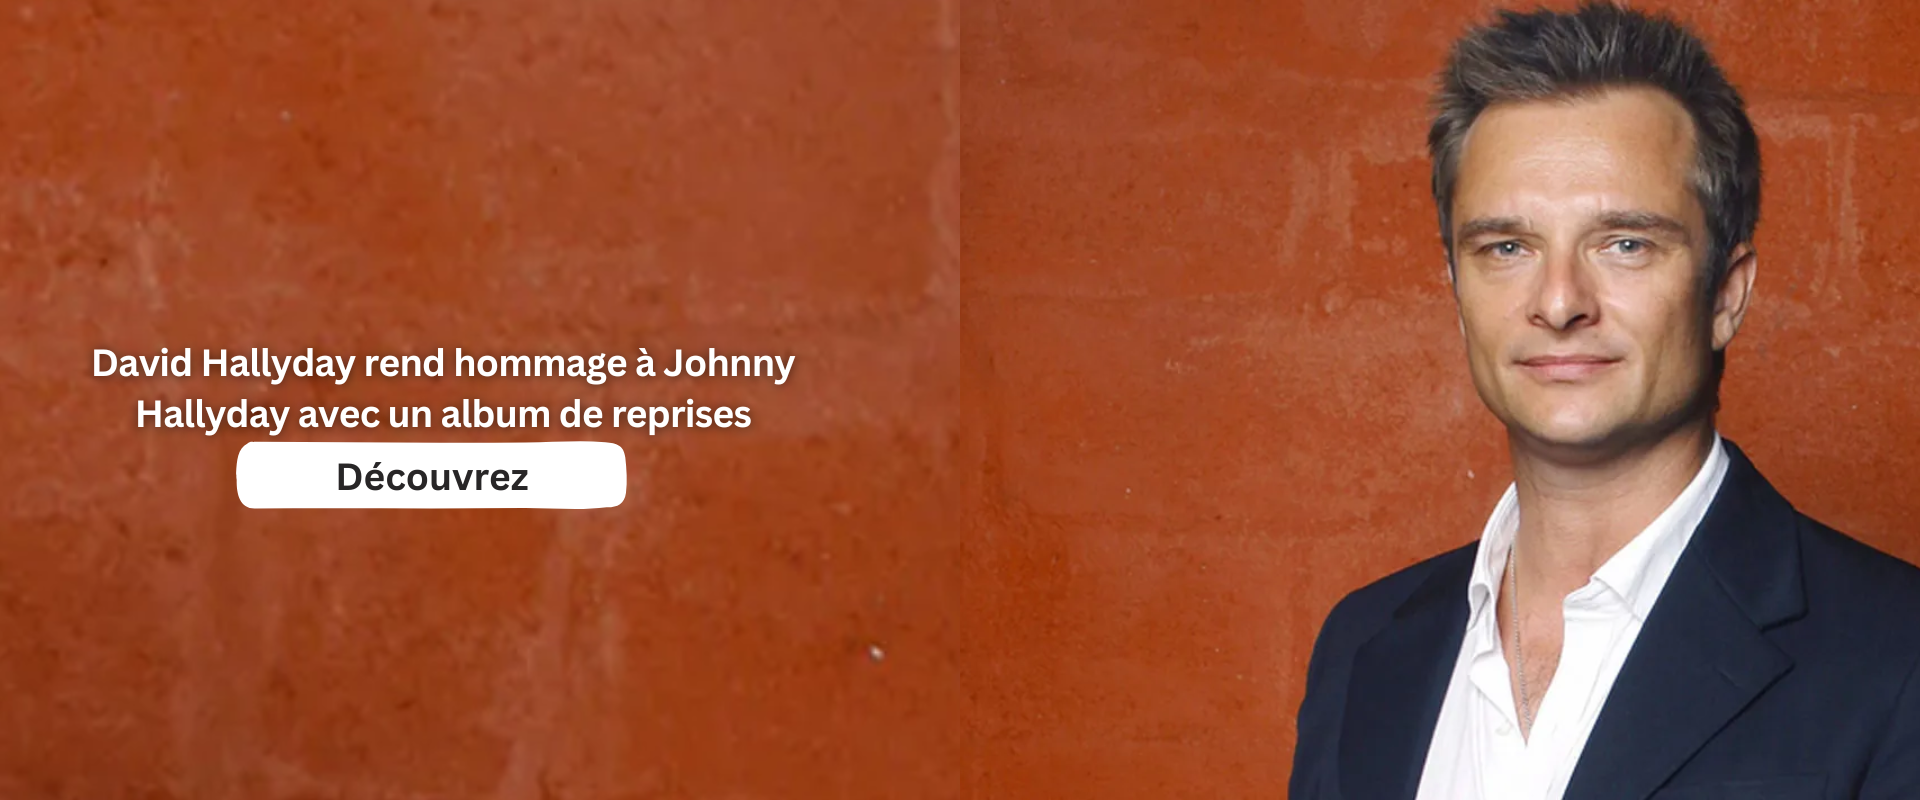 David Hallyday rend hommage à Johnny Hallyday avec un album de reprises